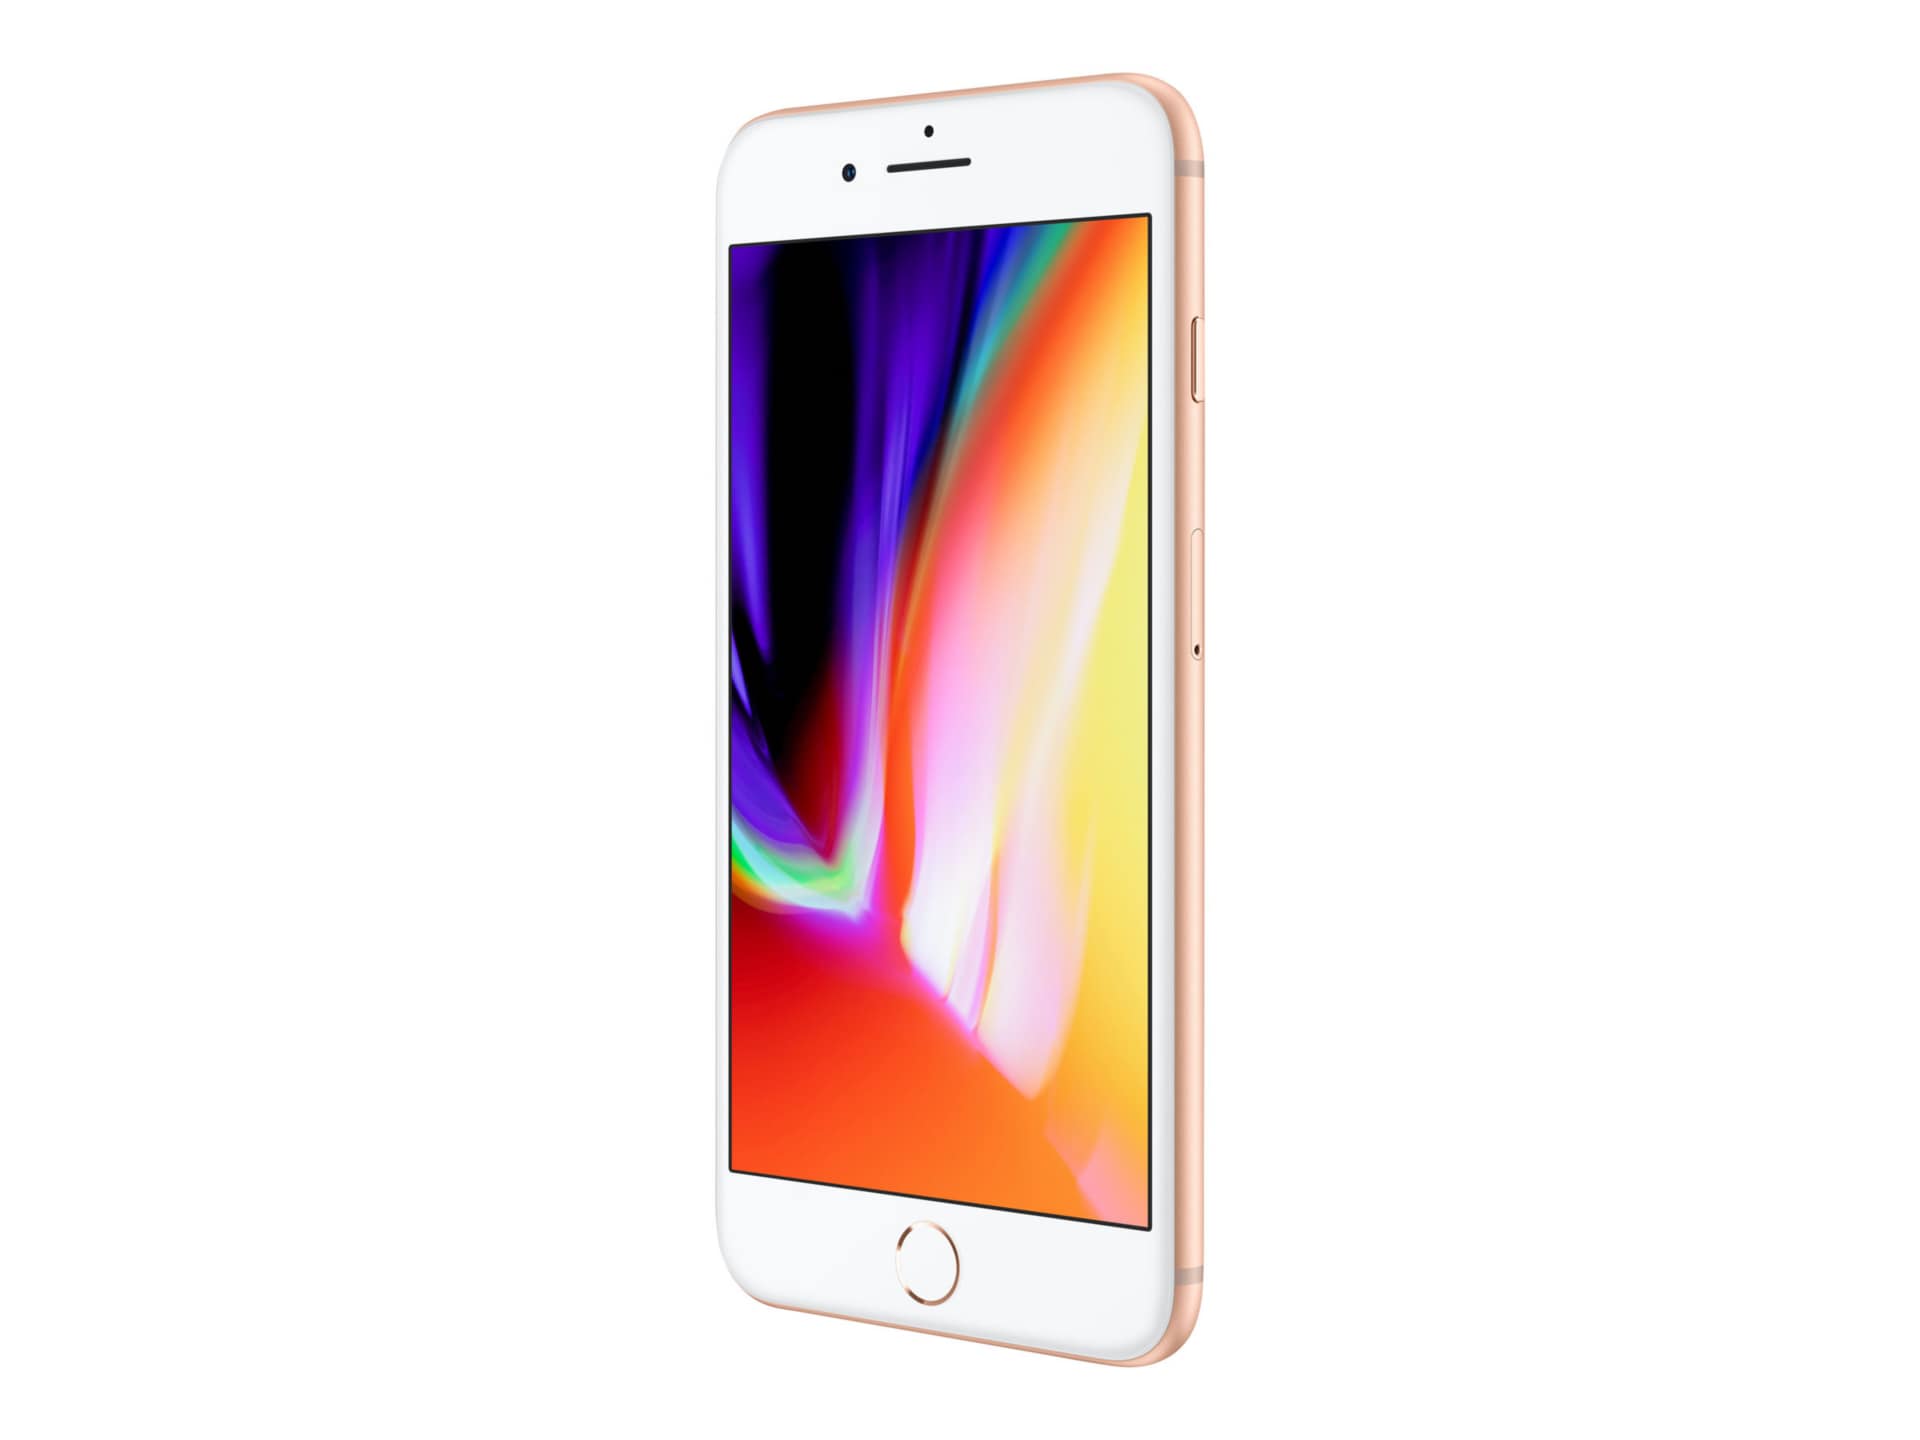 Apple iPhone 8 - gold - 4G - 64 GB - CDMA / GSM - smartphone